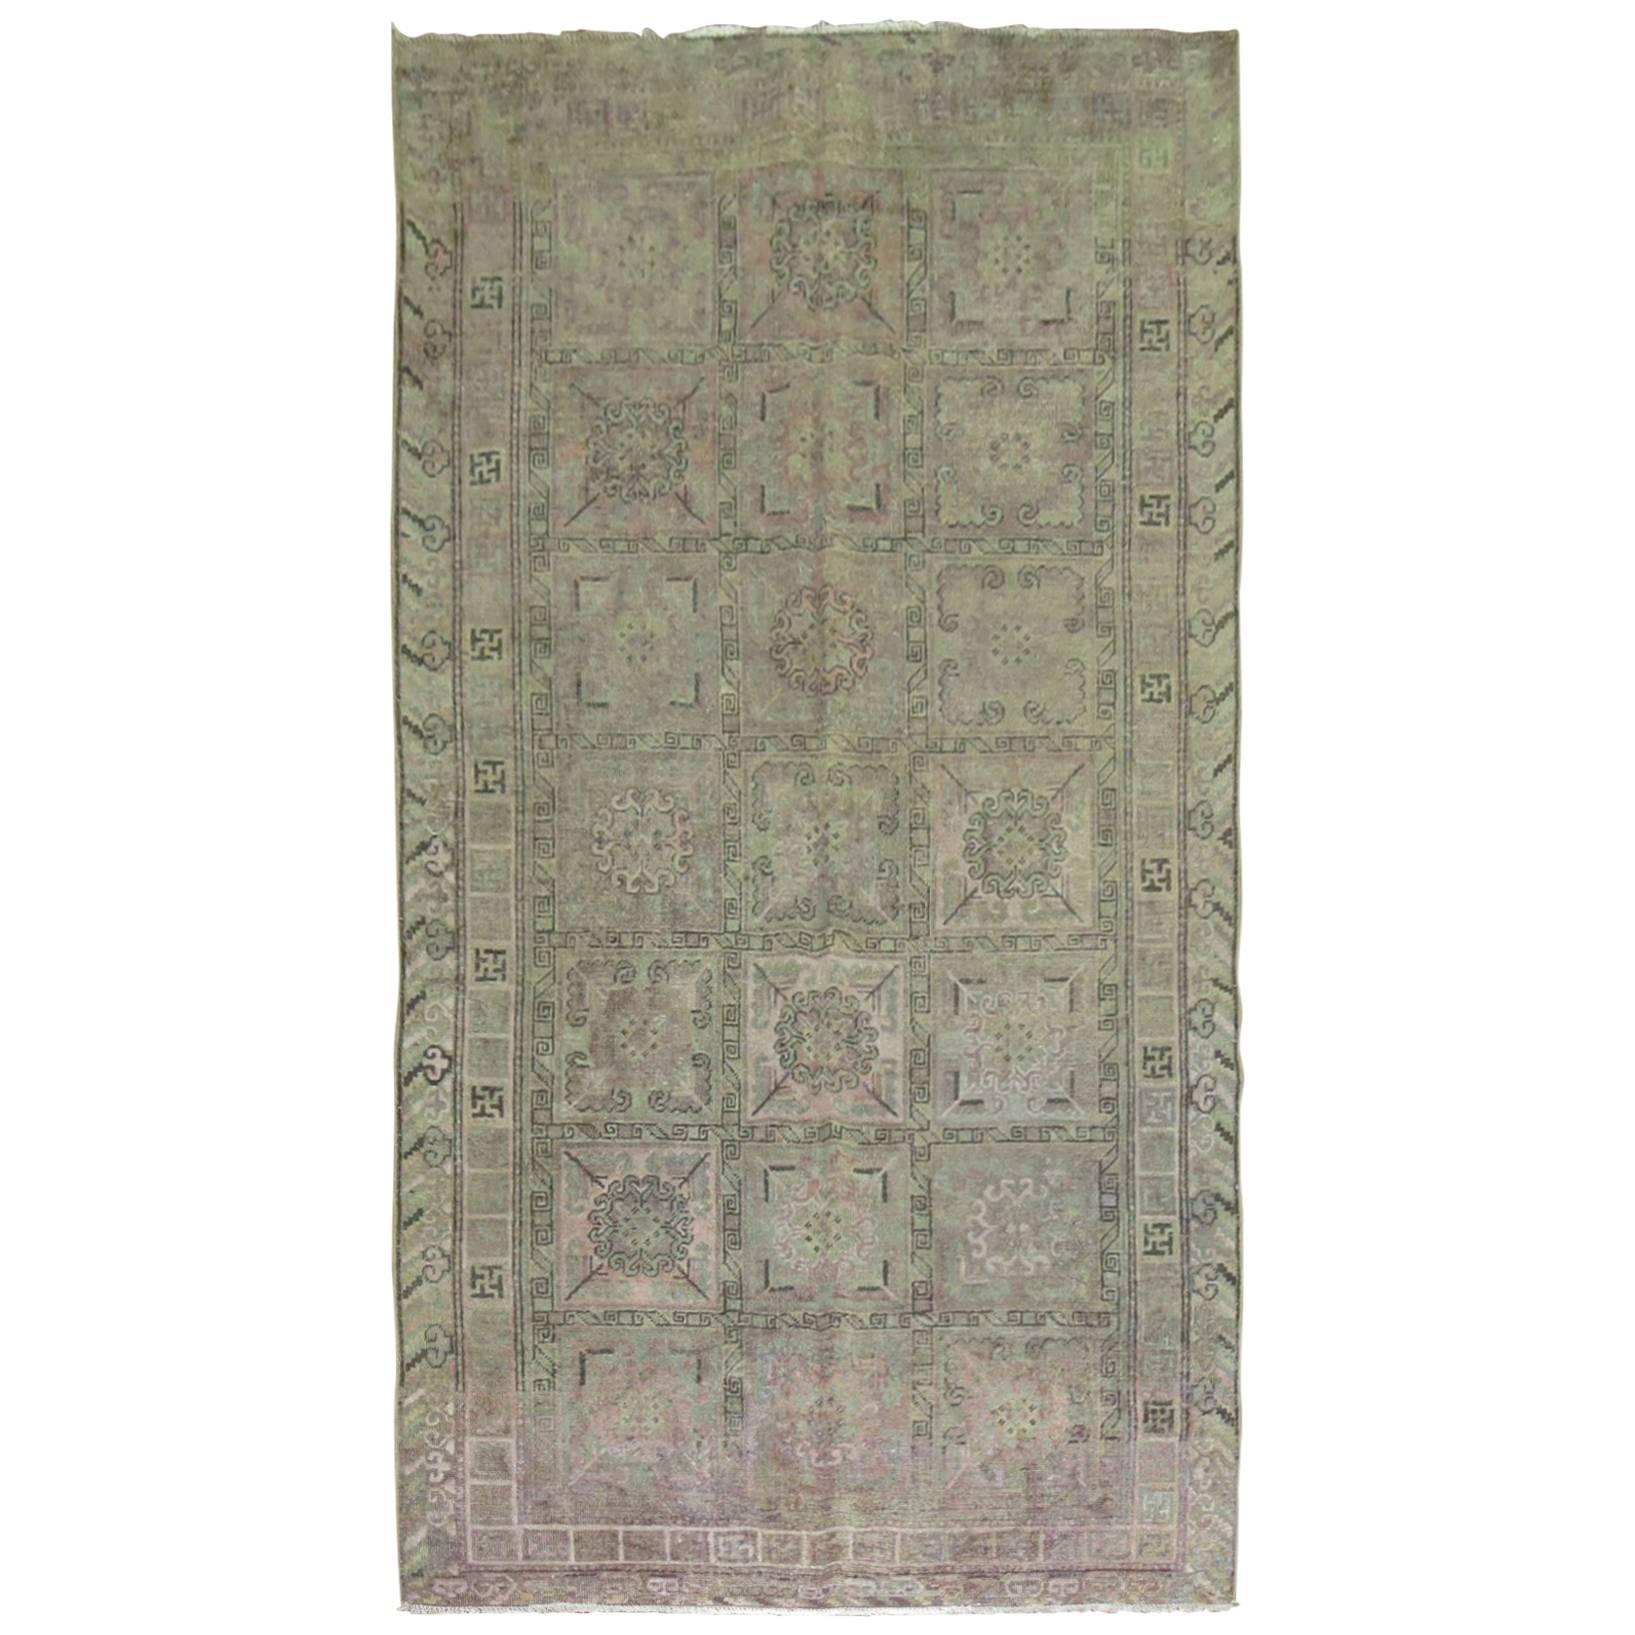 Antiker Khotan Samarkand-Teppich im Used-Stil im Shabby Chic-Stil